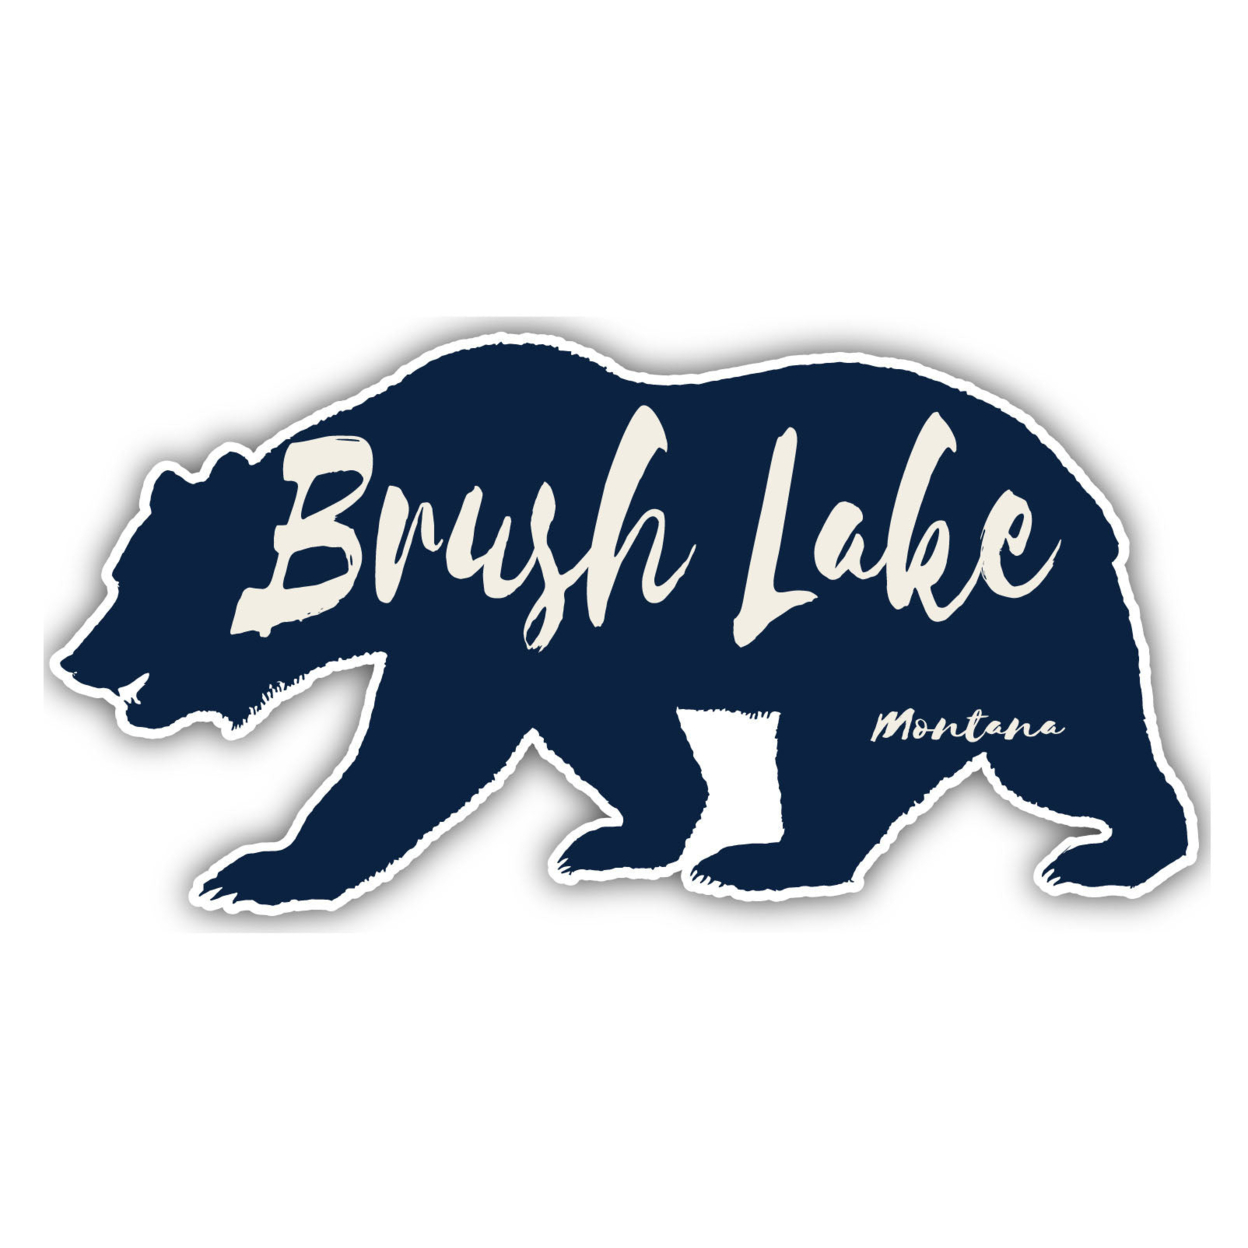 Brush Lake Montana Souvenir Decorative Stickers (Choose Theme And Size) - 4-Pack, 4-Inch, Bear